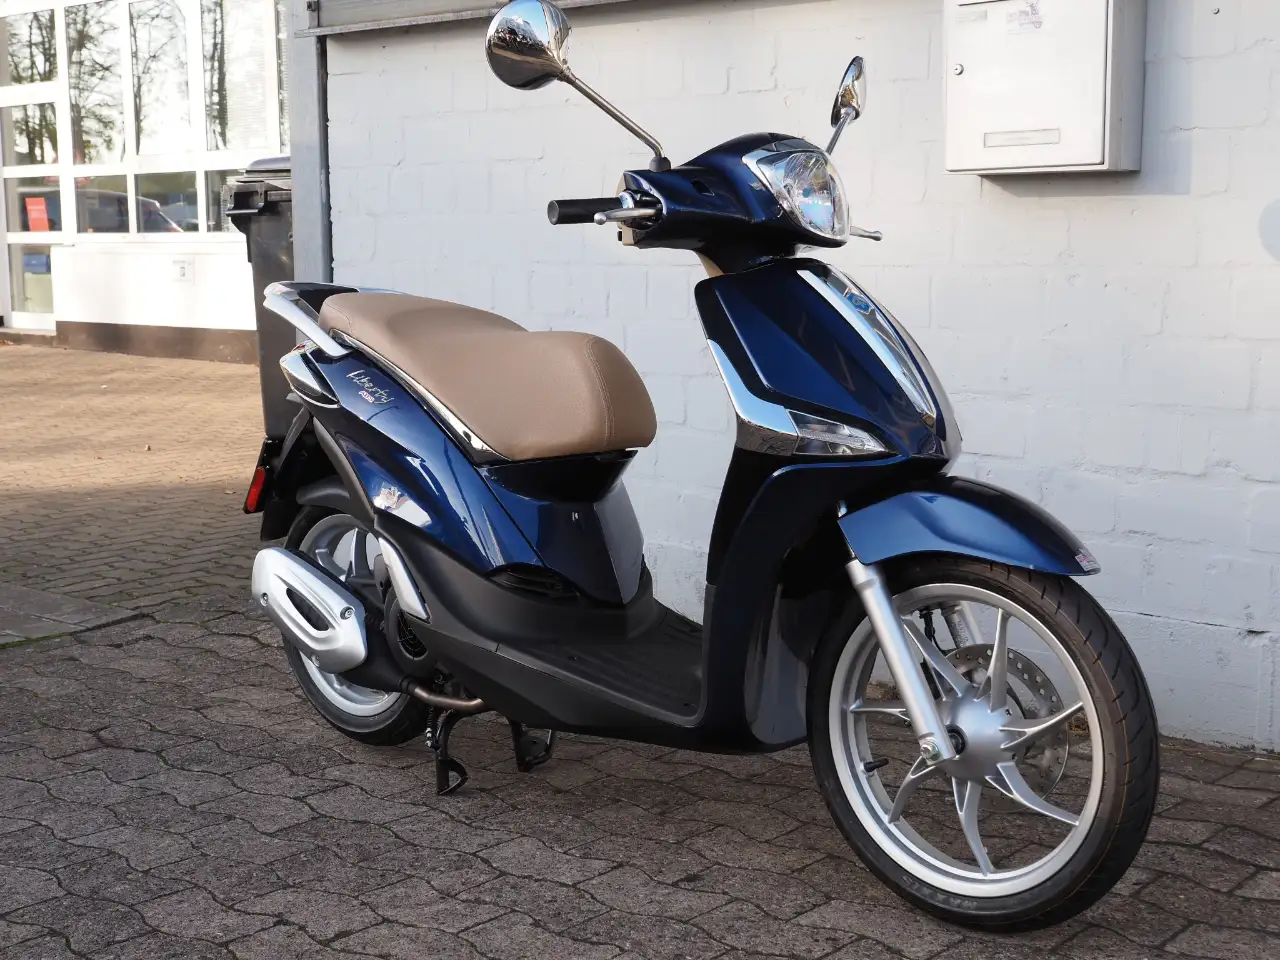 Piaggio Liberty 125 Roller/Scooter in Blau neu in Hannover für € 2.999,-